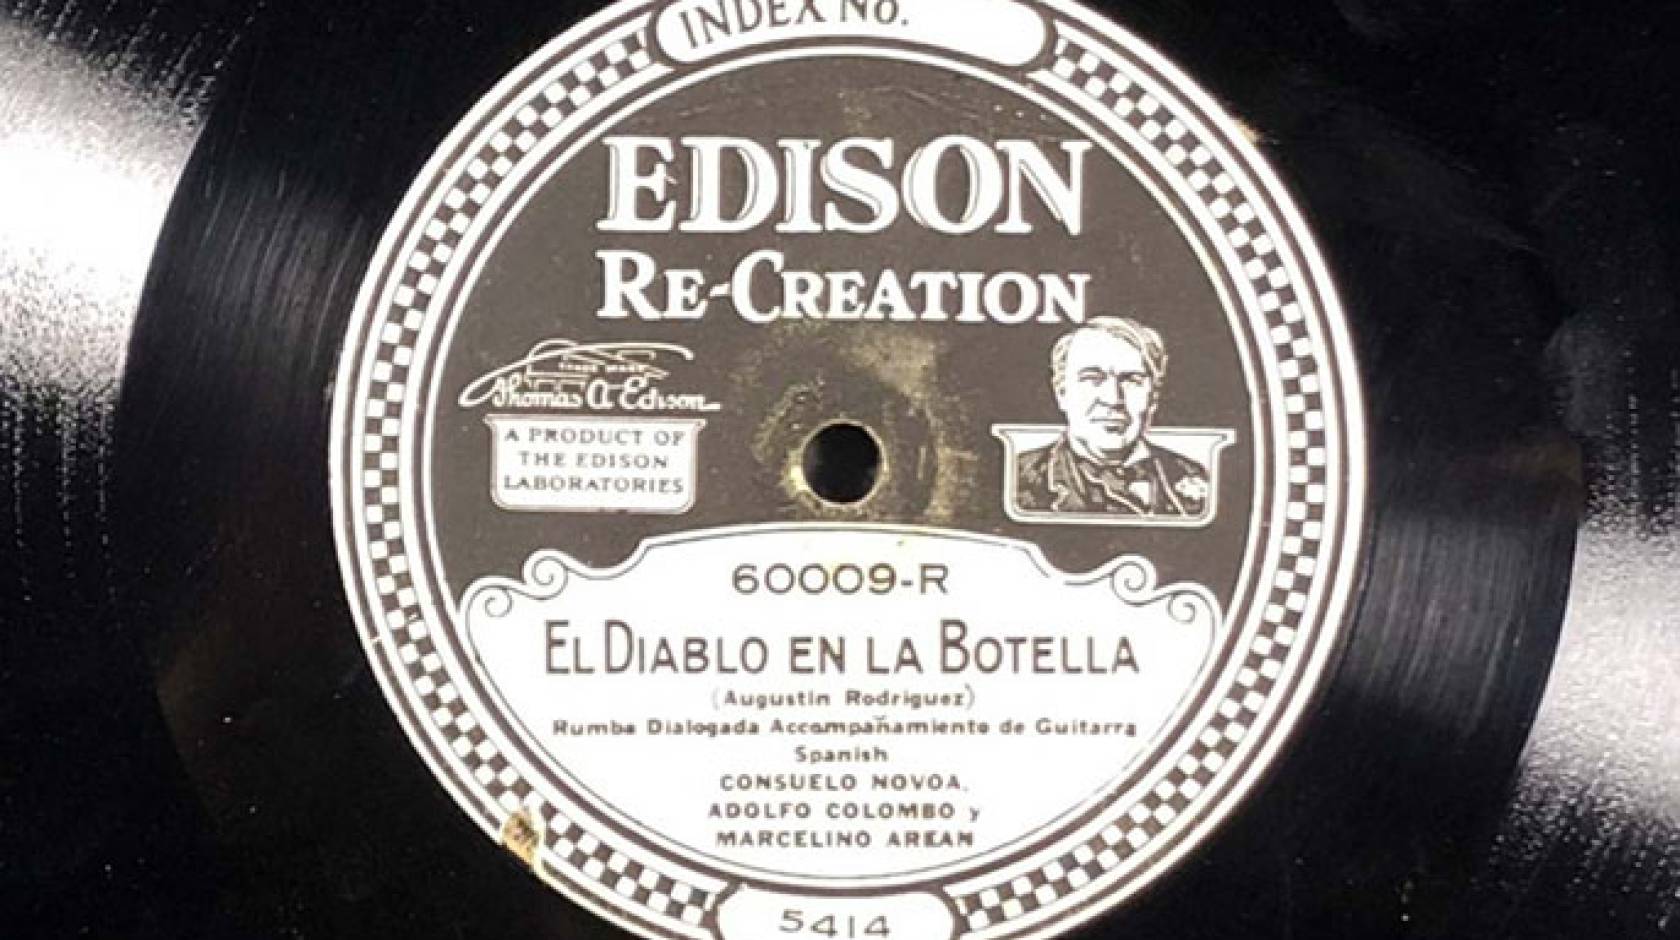 Edison record label